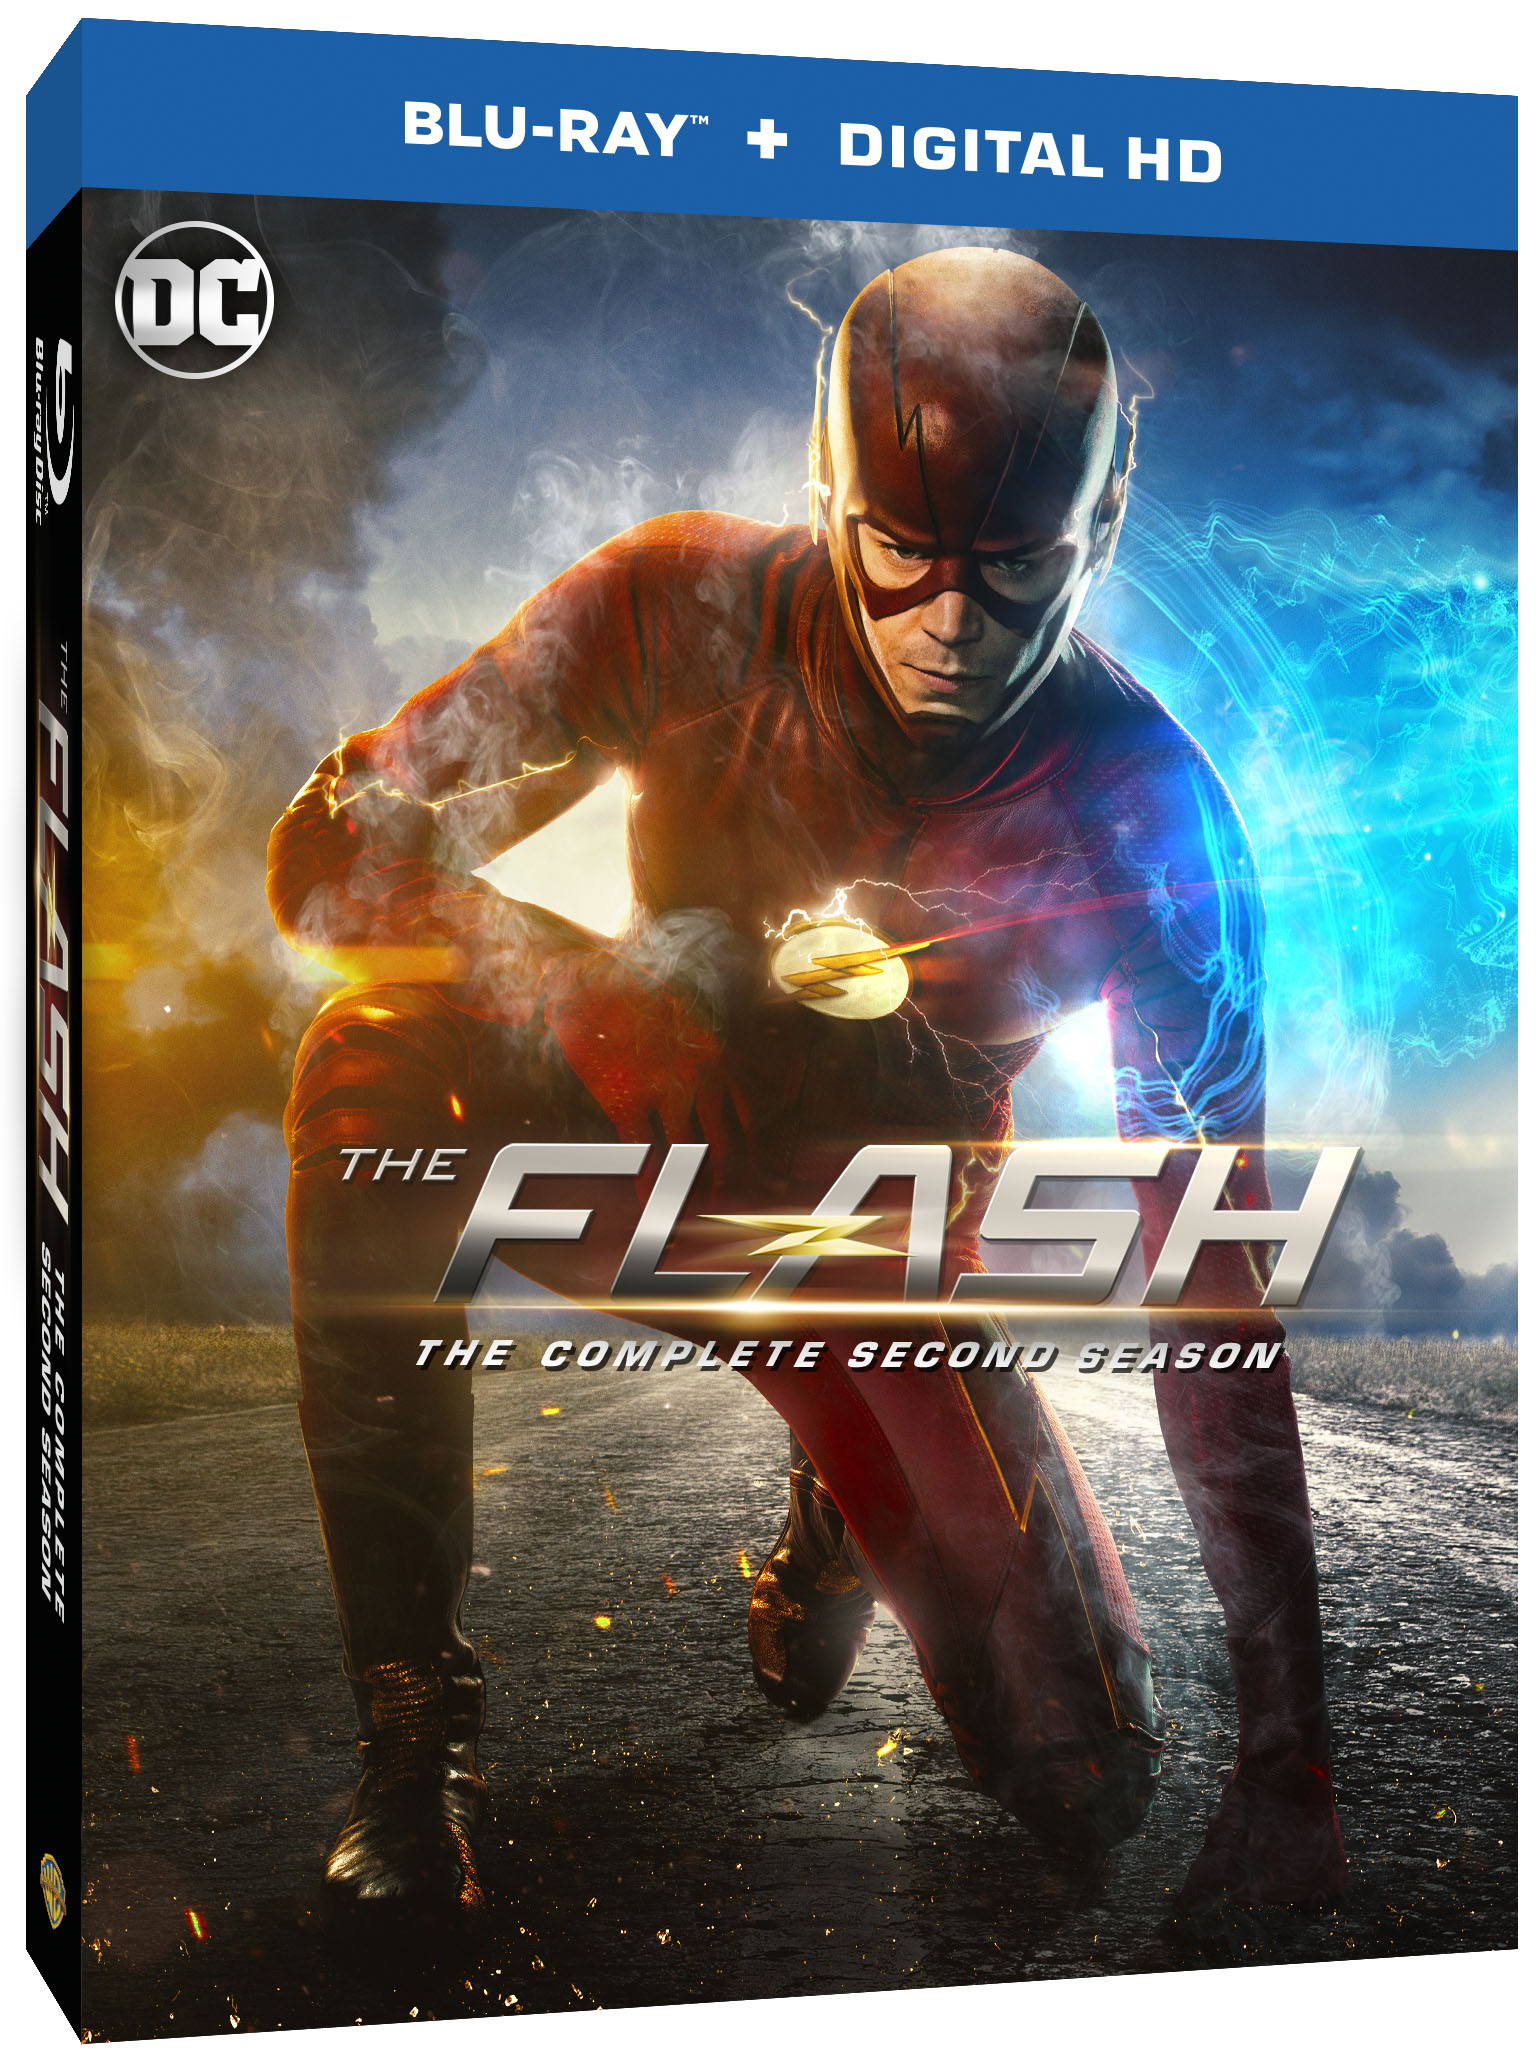 The Flash Season 2 Bluray & DVD Box Art, Release Date & Extras